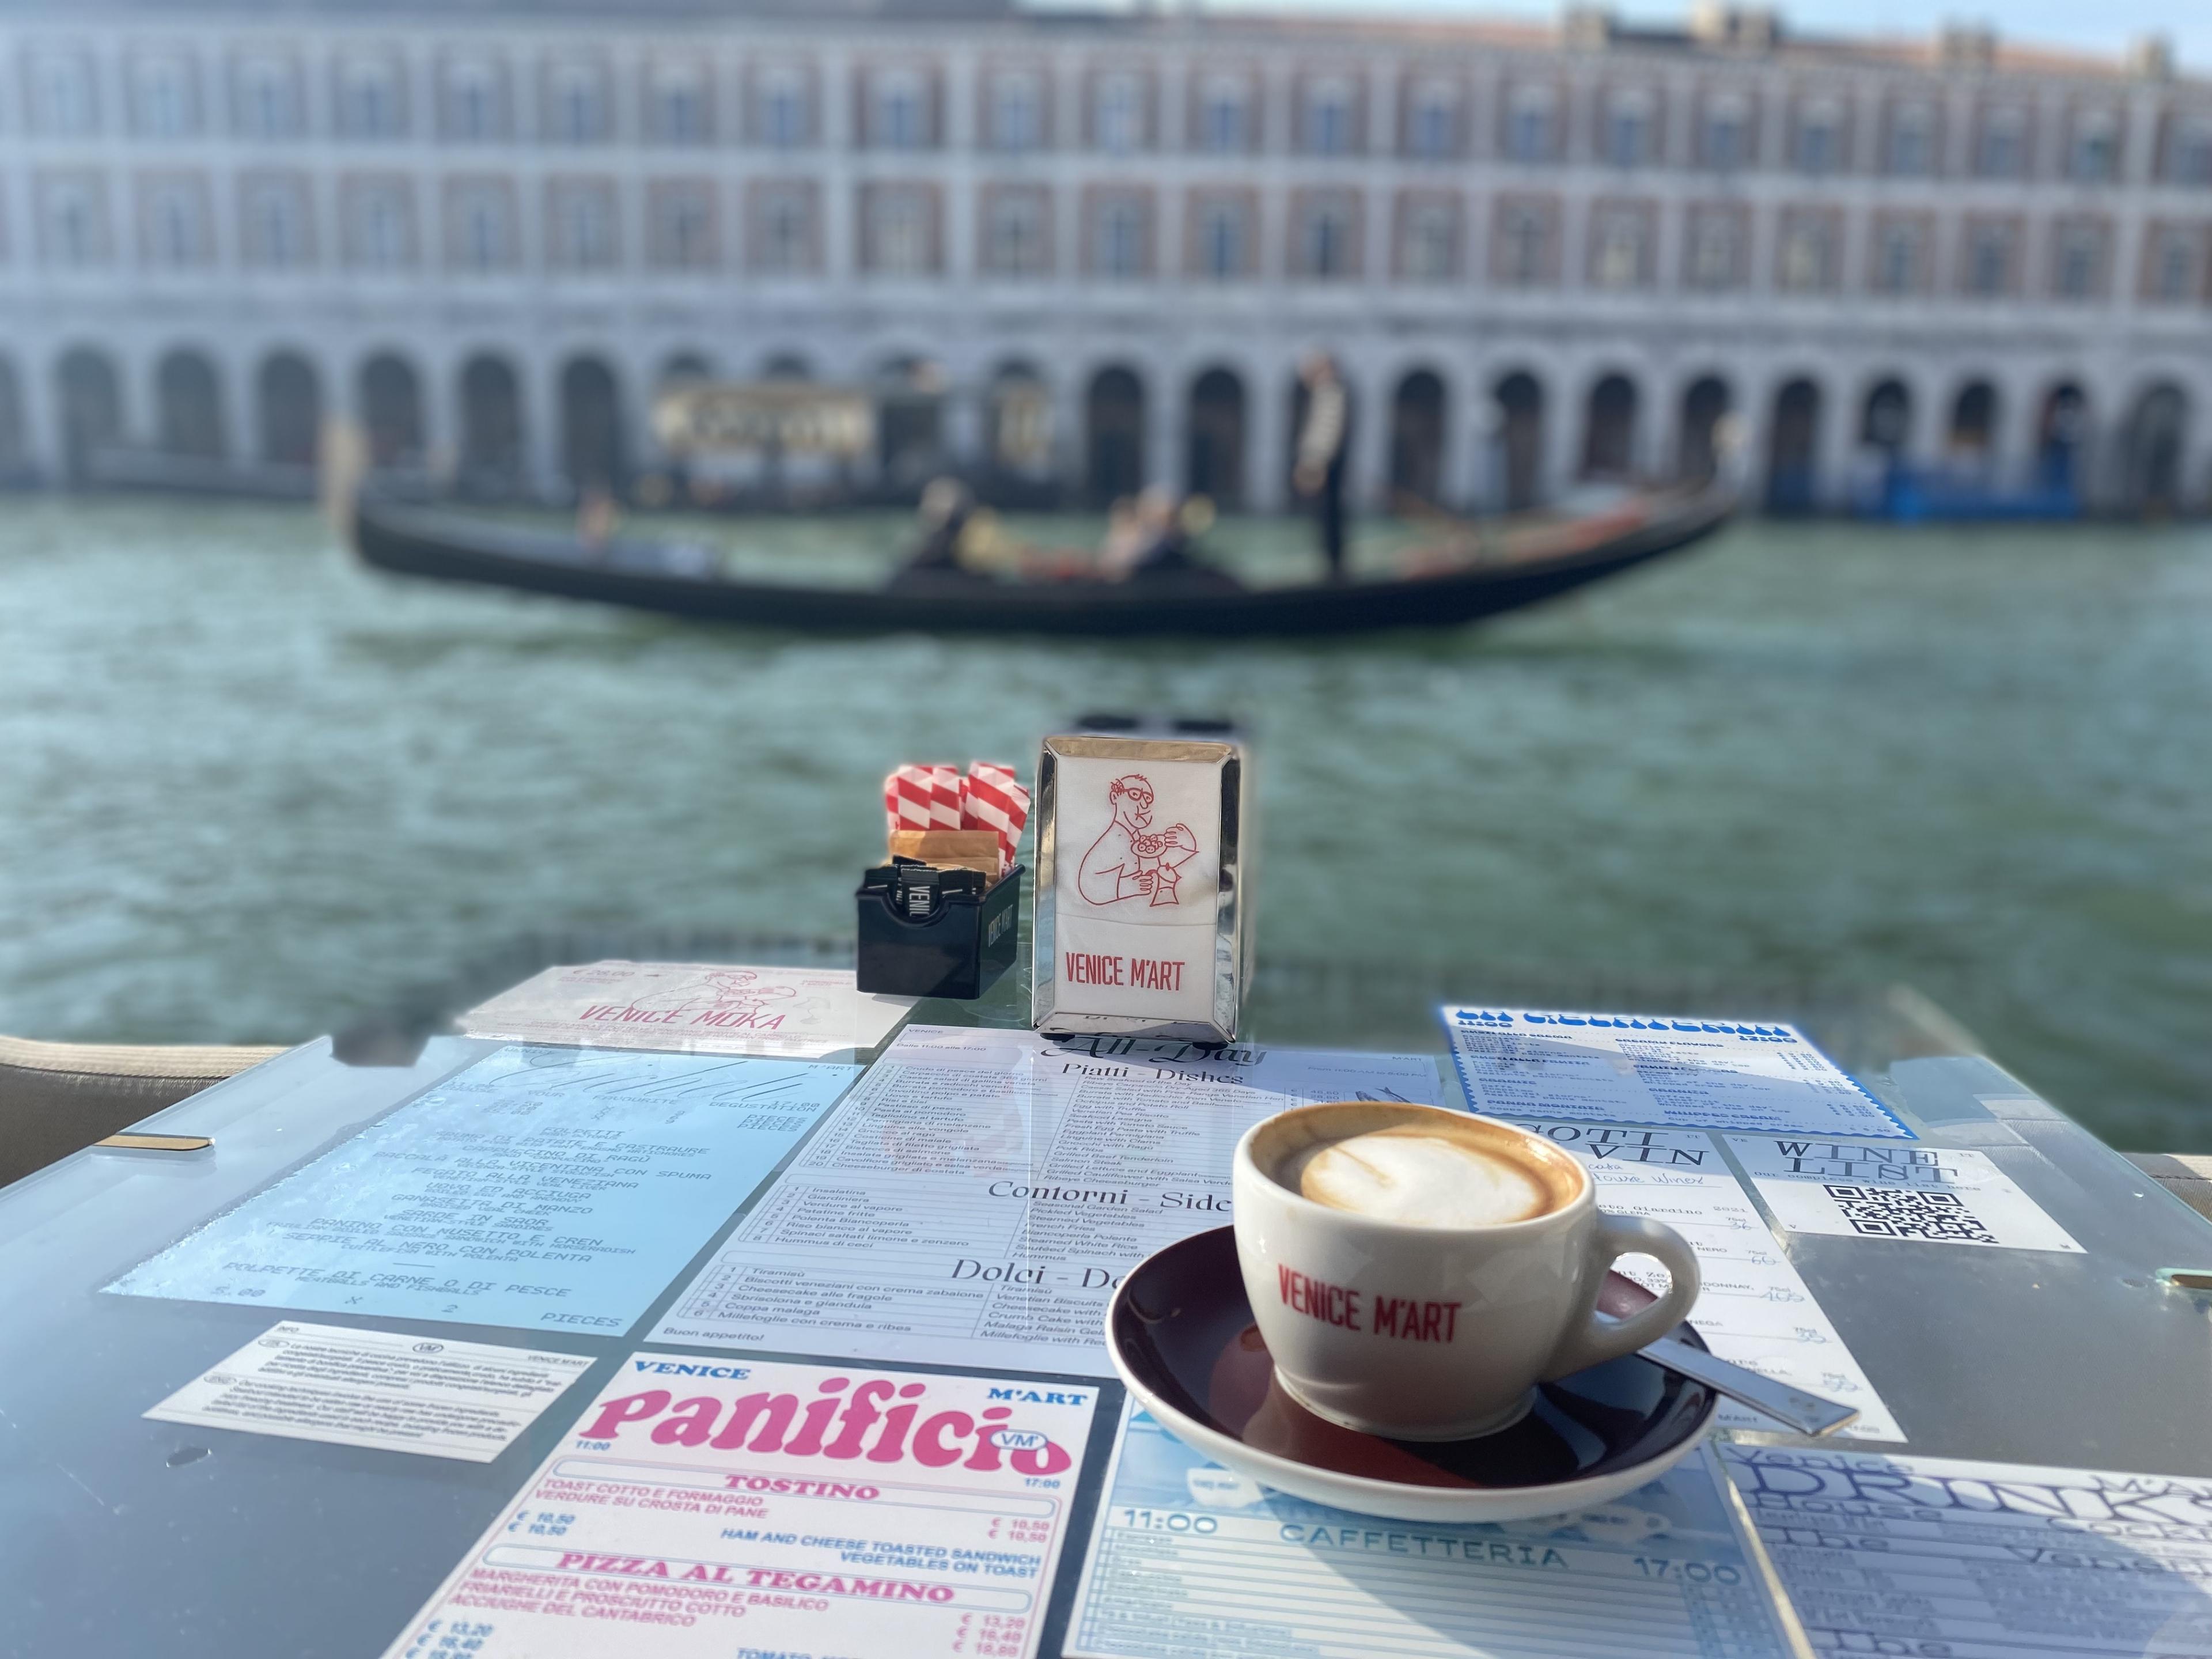 Cappuccino at M'Art, at the Venice Venice Hotel